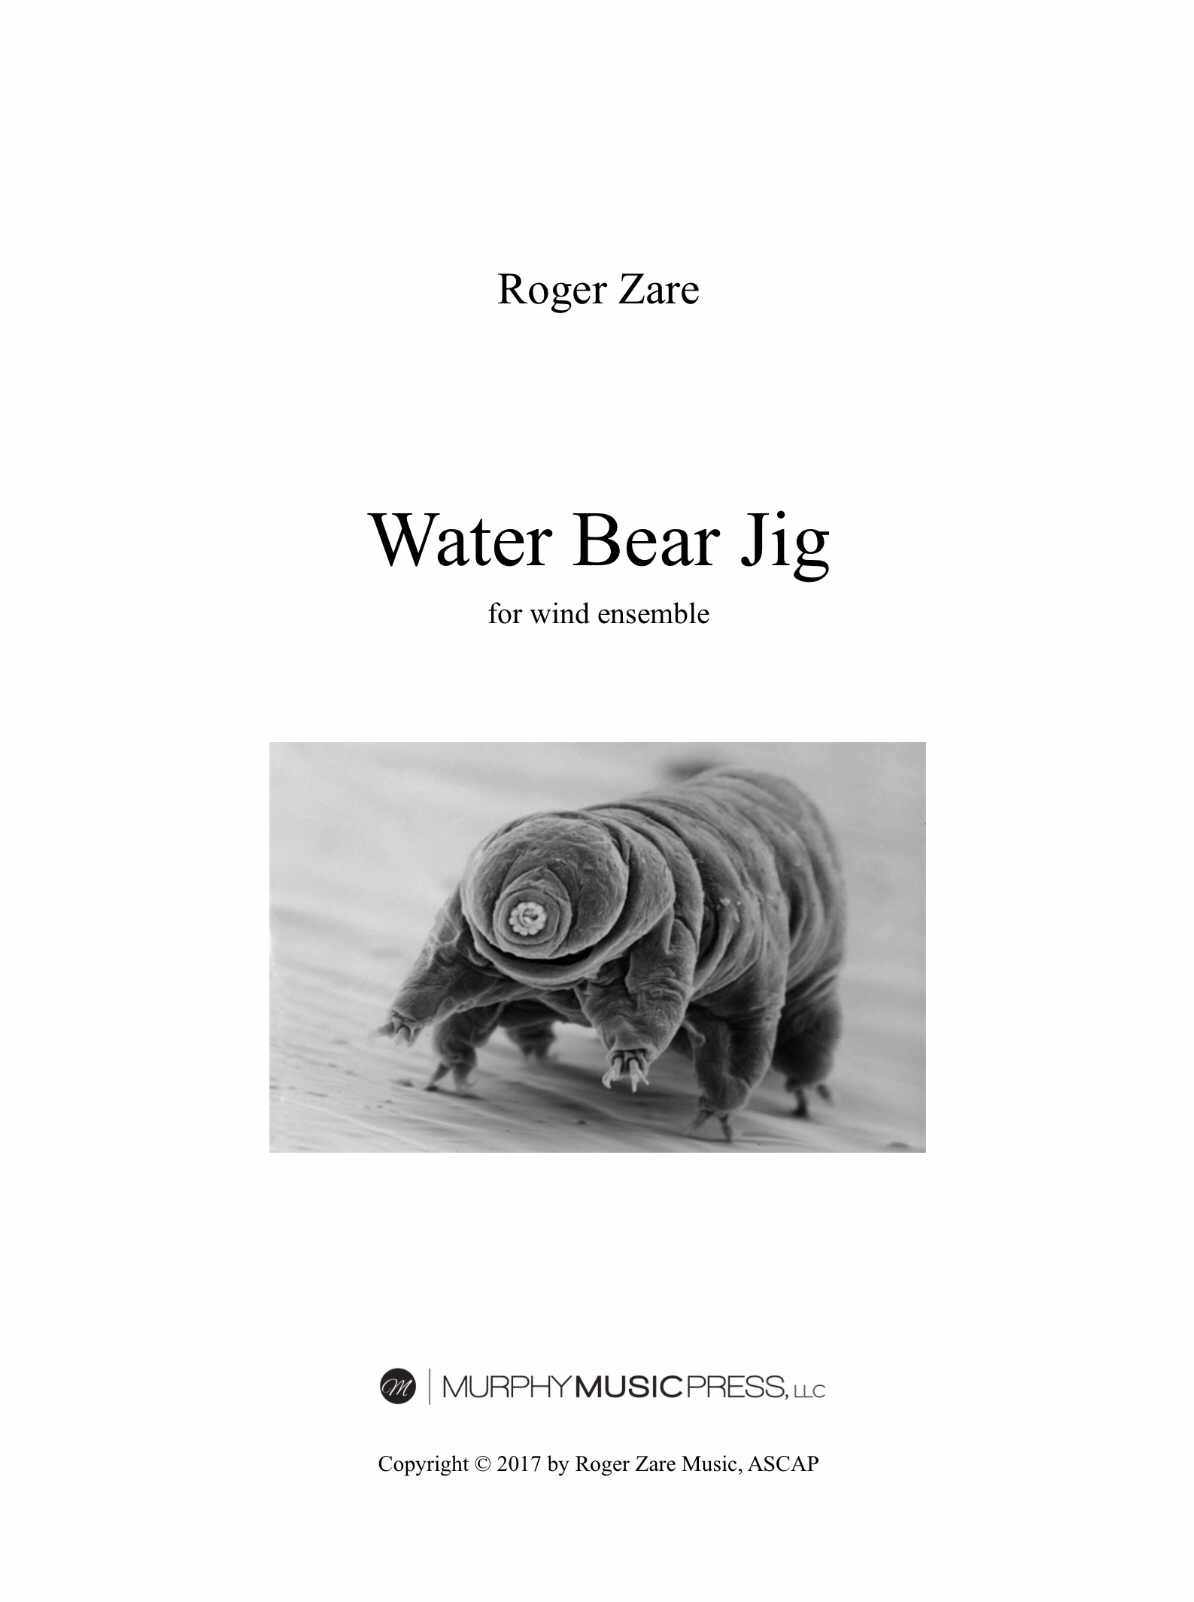 Water Bear Jig (Score Only) by Roger Zare